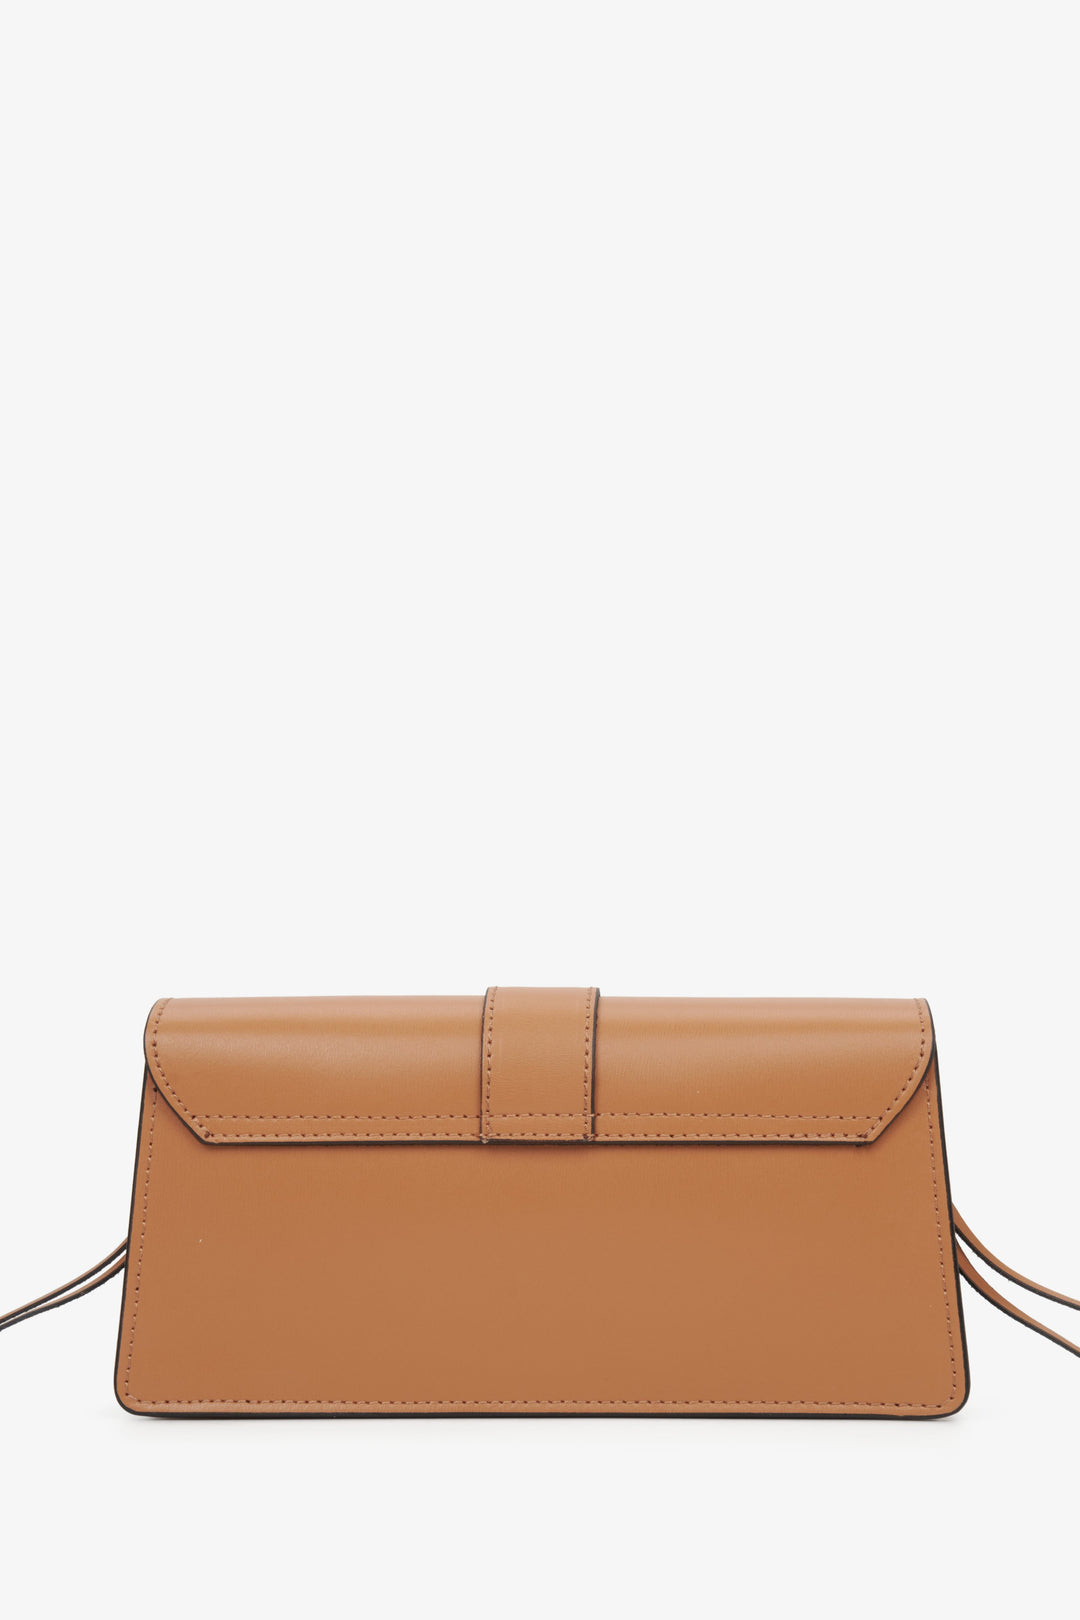 Women's brown leather handbag Estro - reverse.